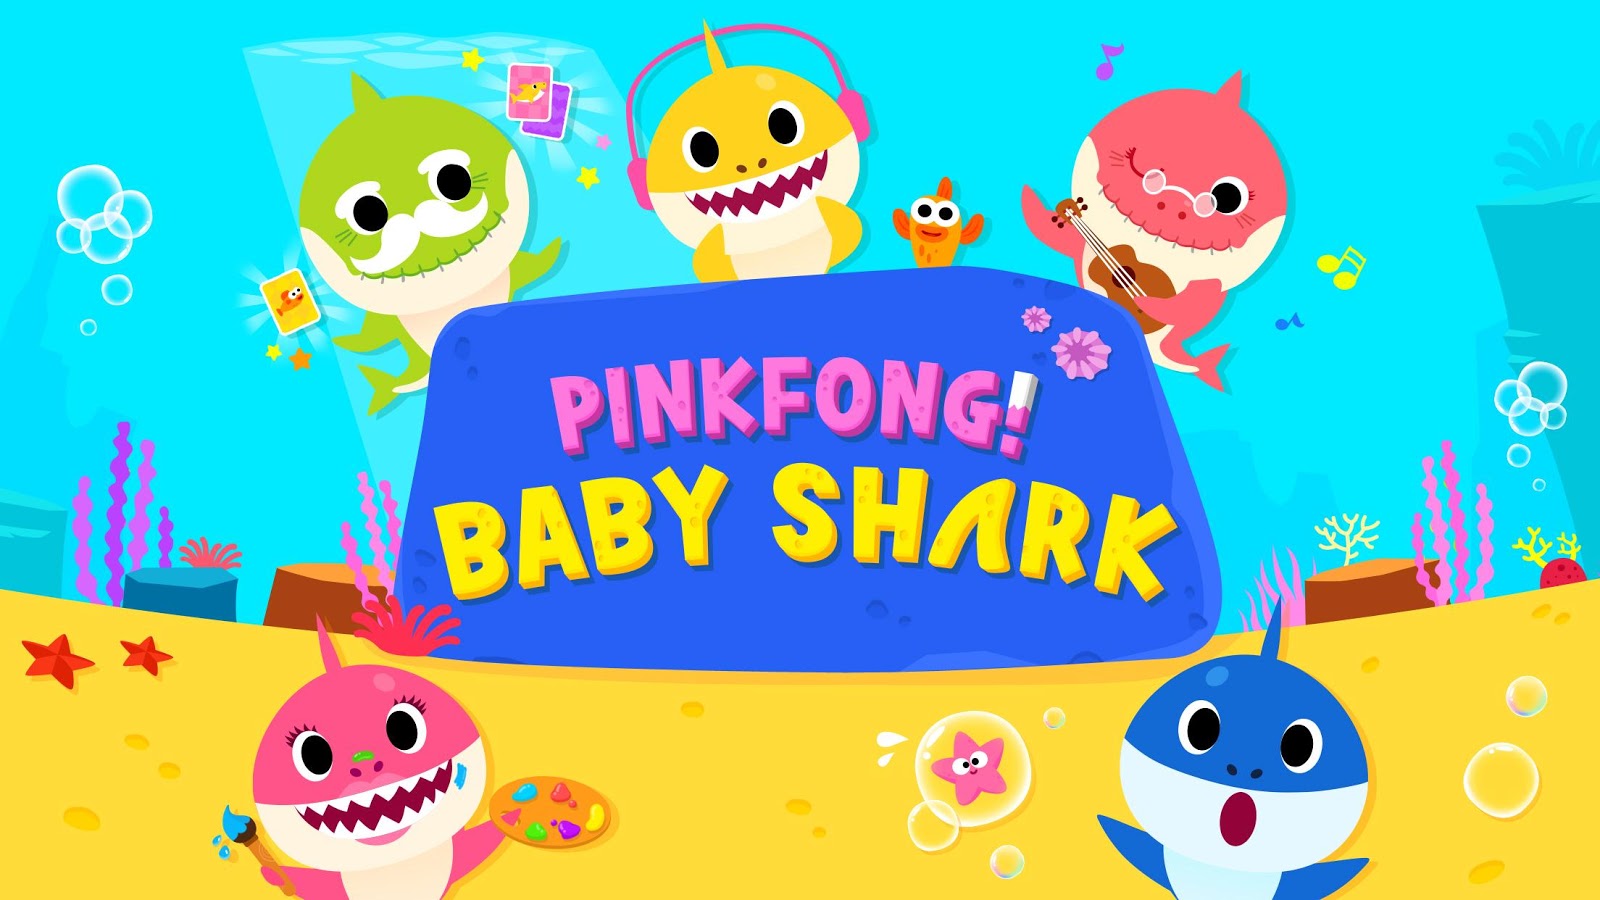 95+] Baby Shark Pinkfong Wallpapers on WallpaperSafari.